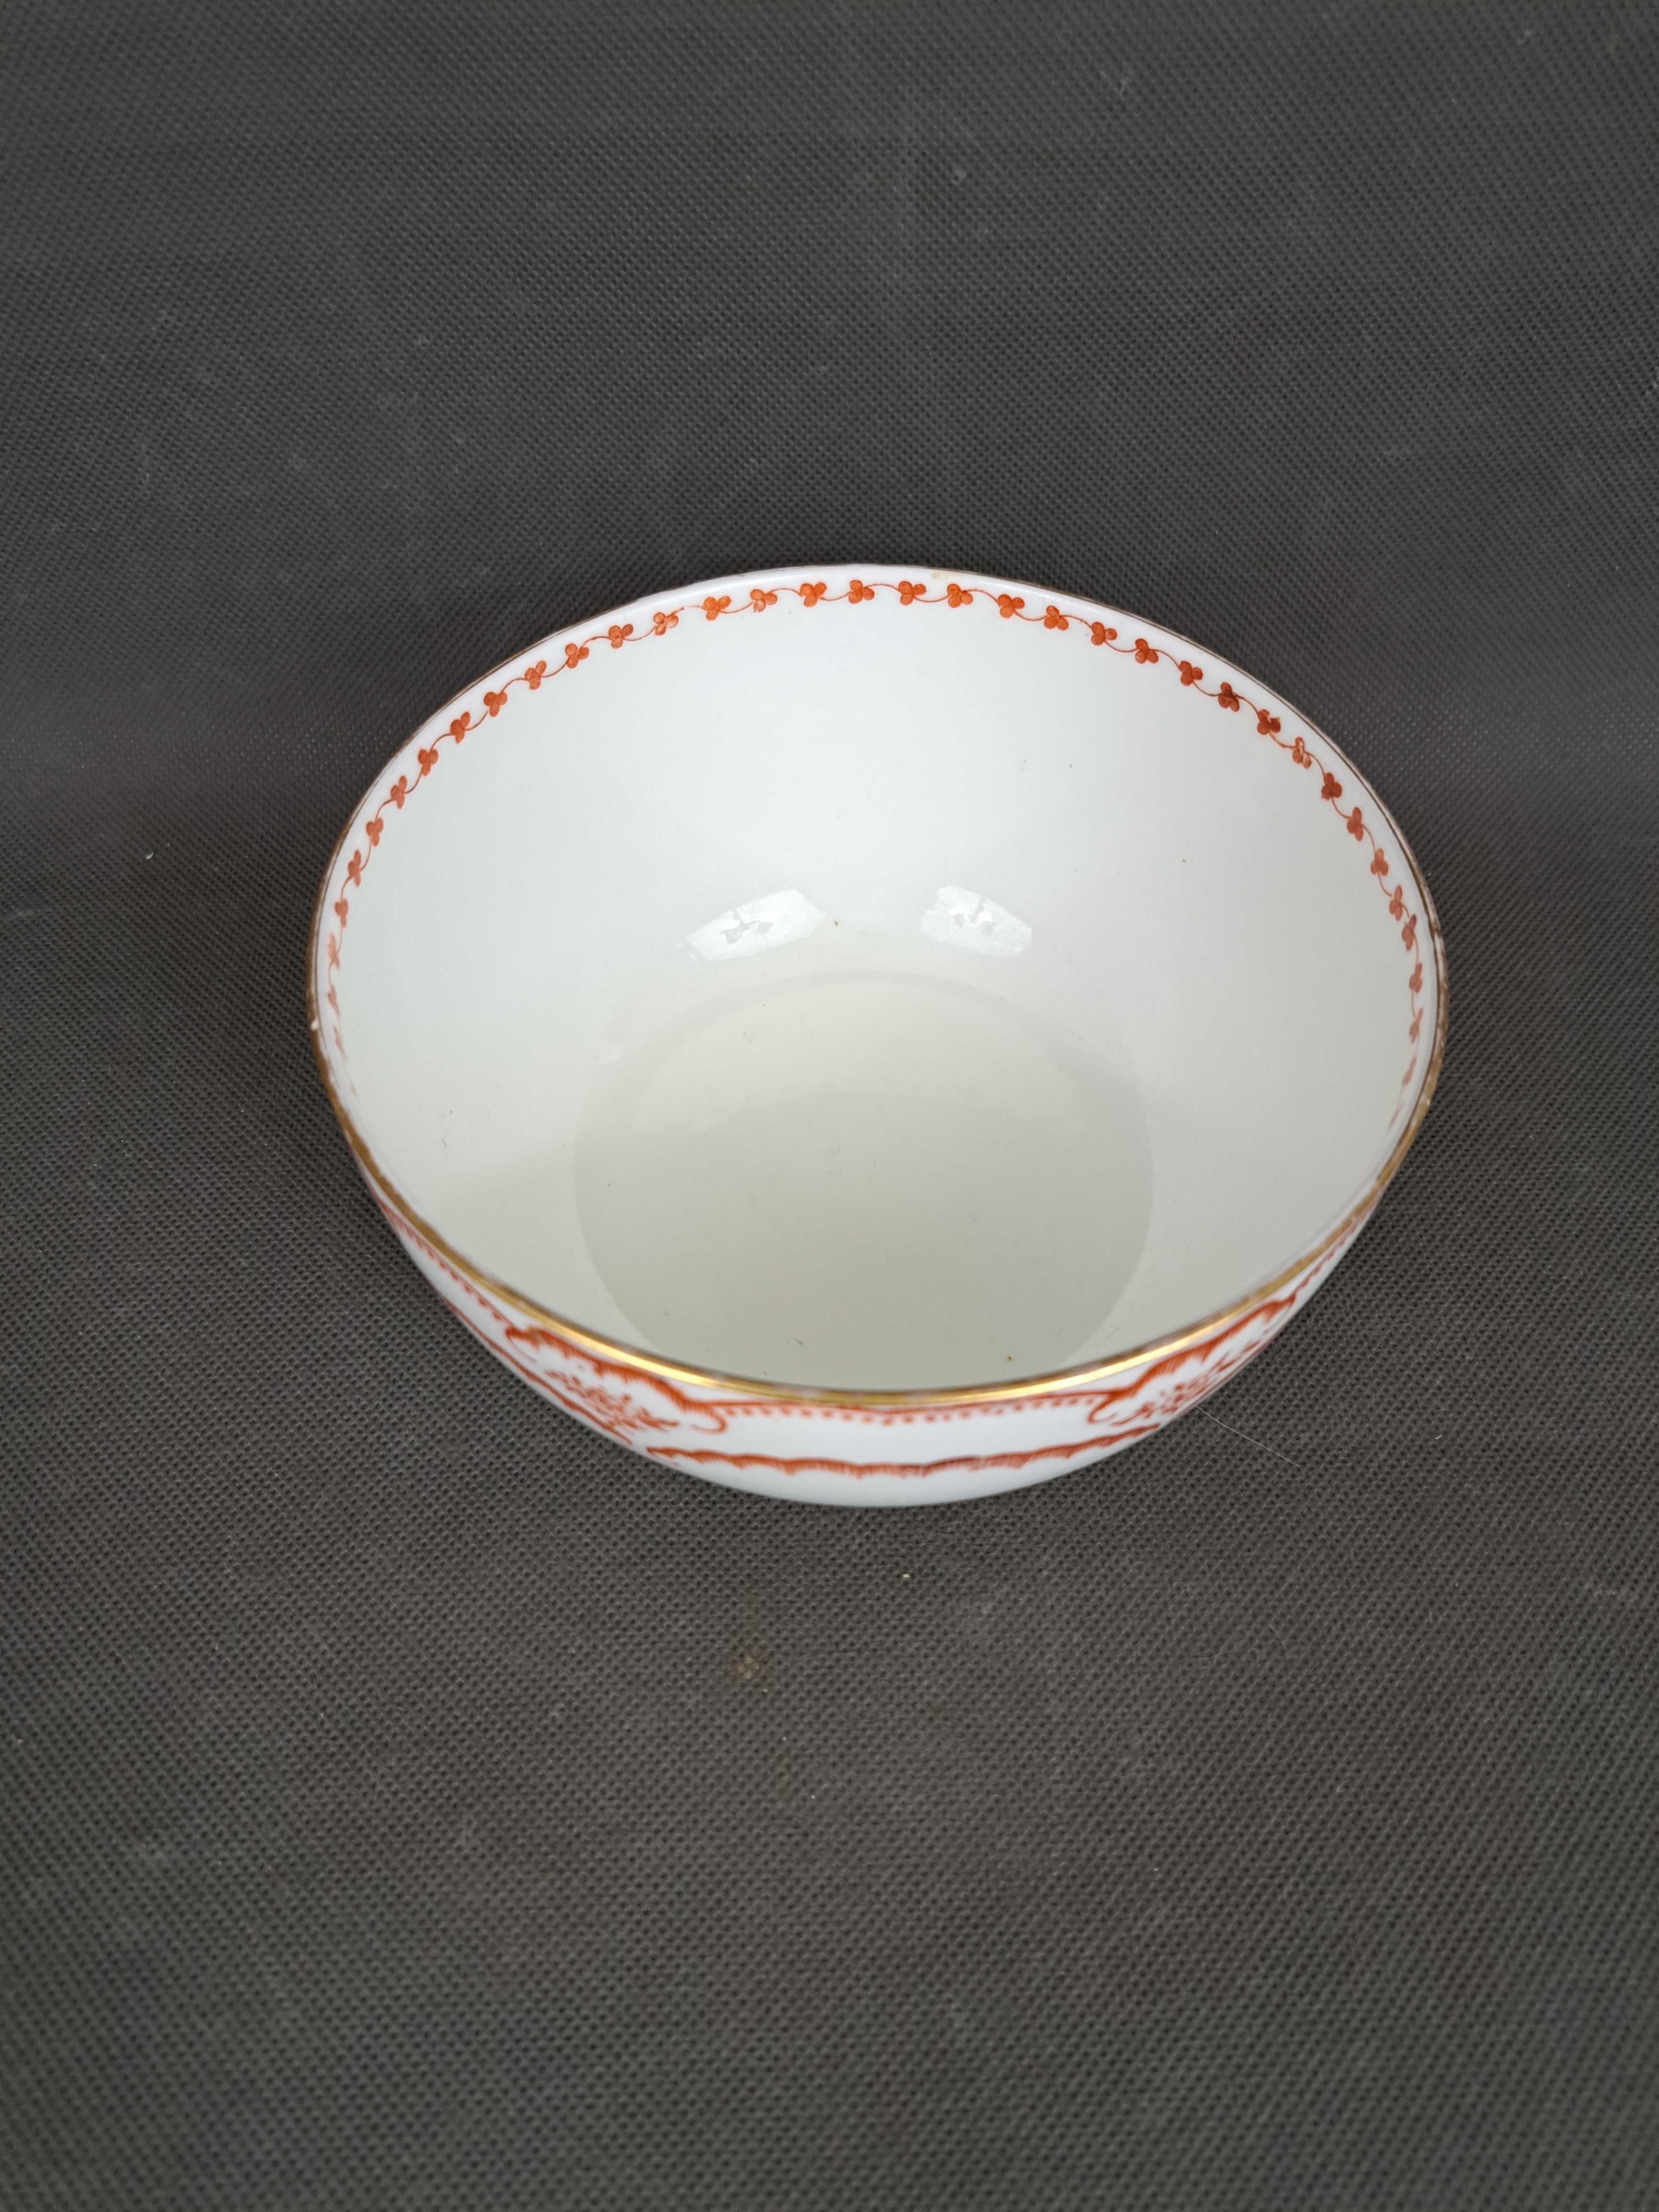 Angielska miska porcelanowa Wedgwood 1891 - 1900 r.